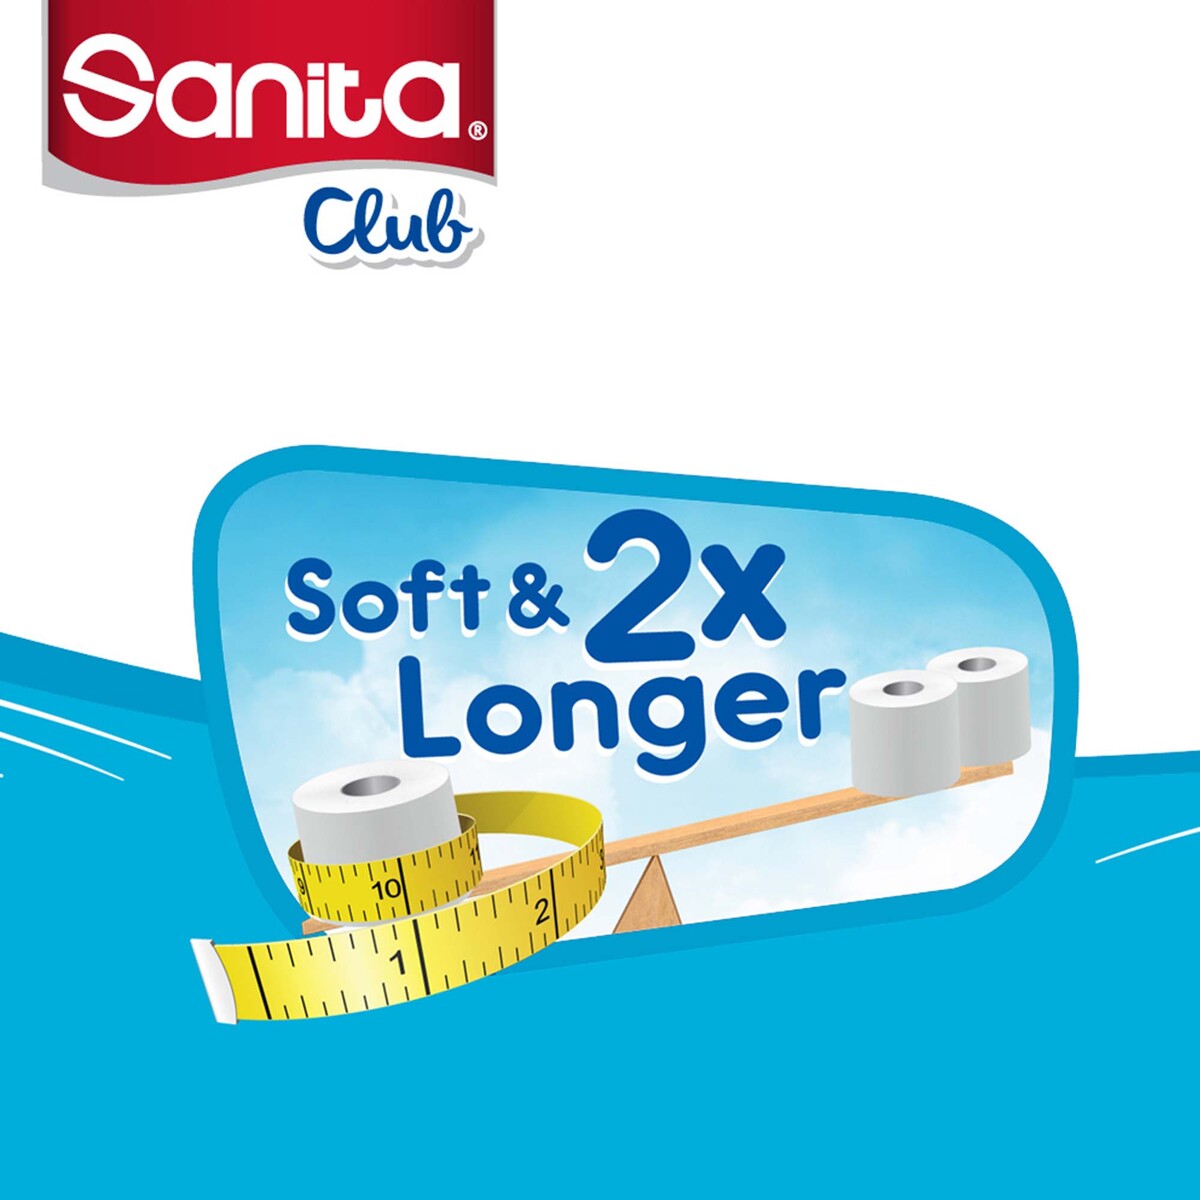 Sanita Club Toilet Tissue Plain 2ply 10 Rolls